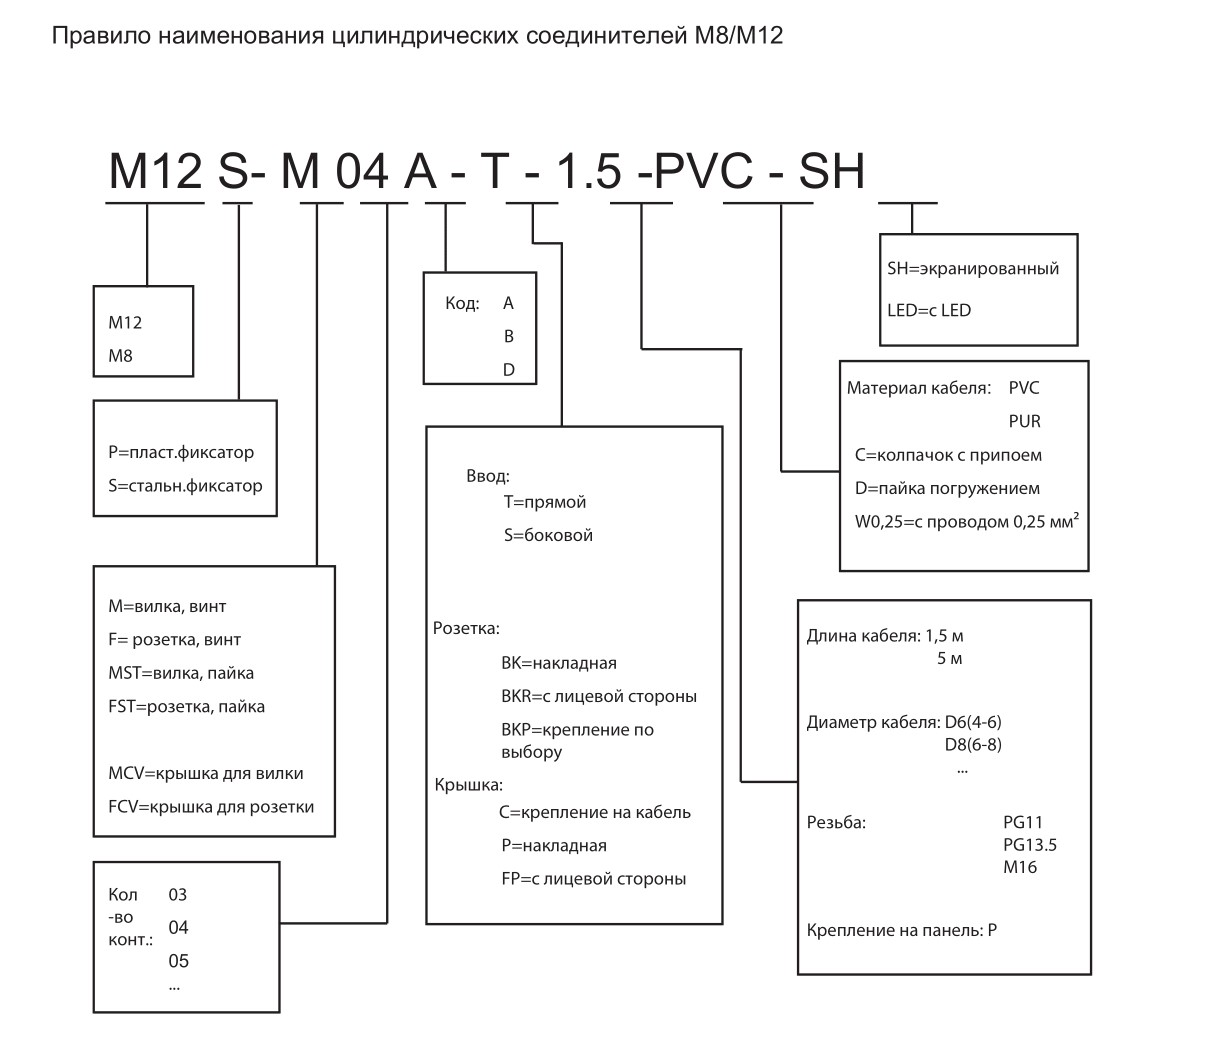 Цилиндрический соединитель-вилка M12-M04D-BKR-M16-D 1630043141008: Структура обозначения